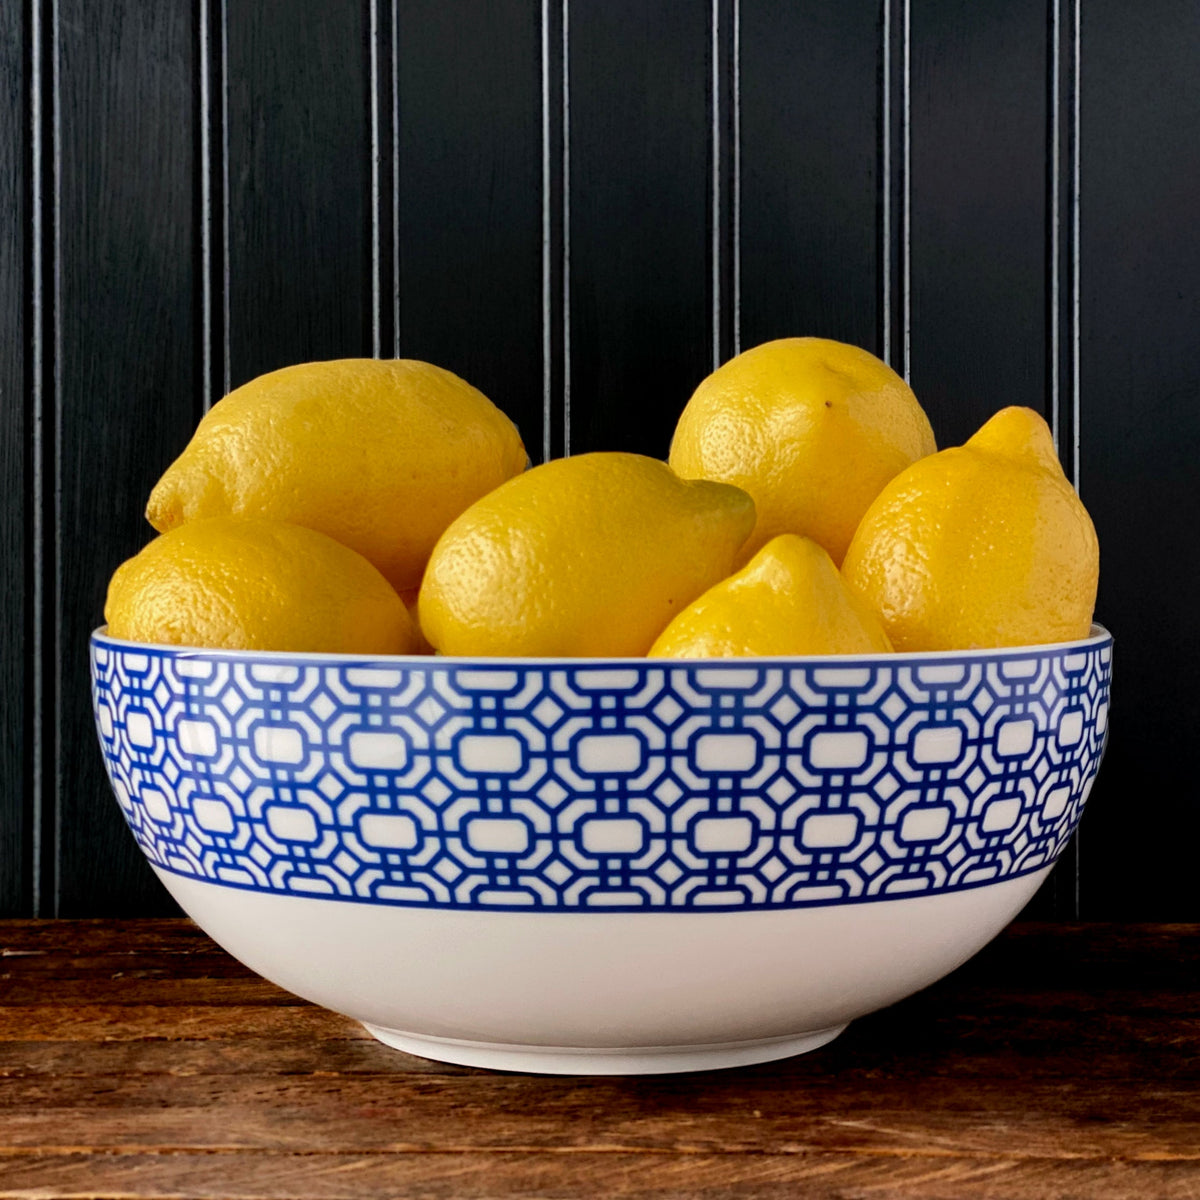 A Newport Garden Gate Vegetable Serving Bowl by Caskata Artisanal Home filled with lemons.